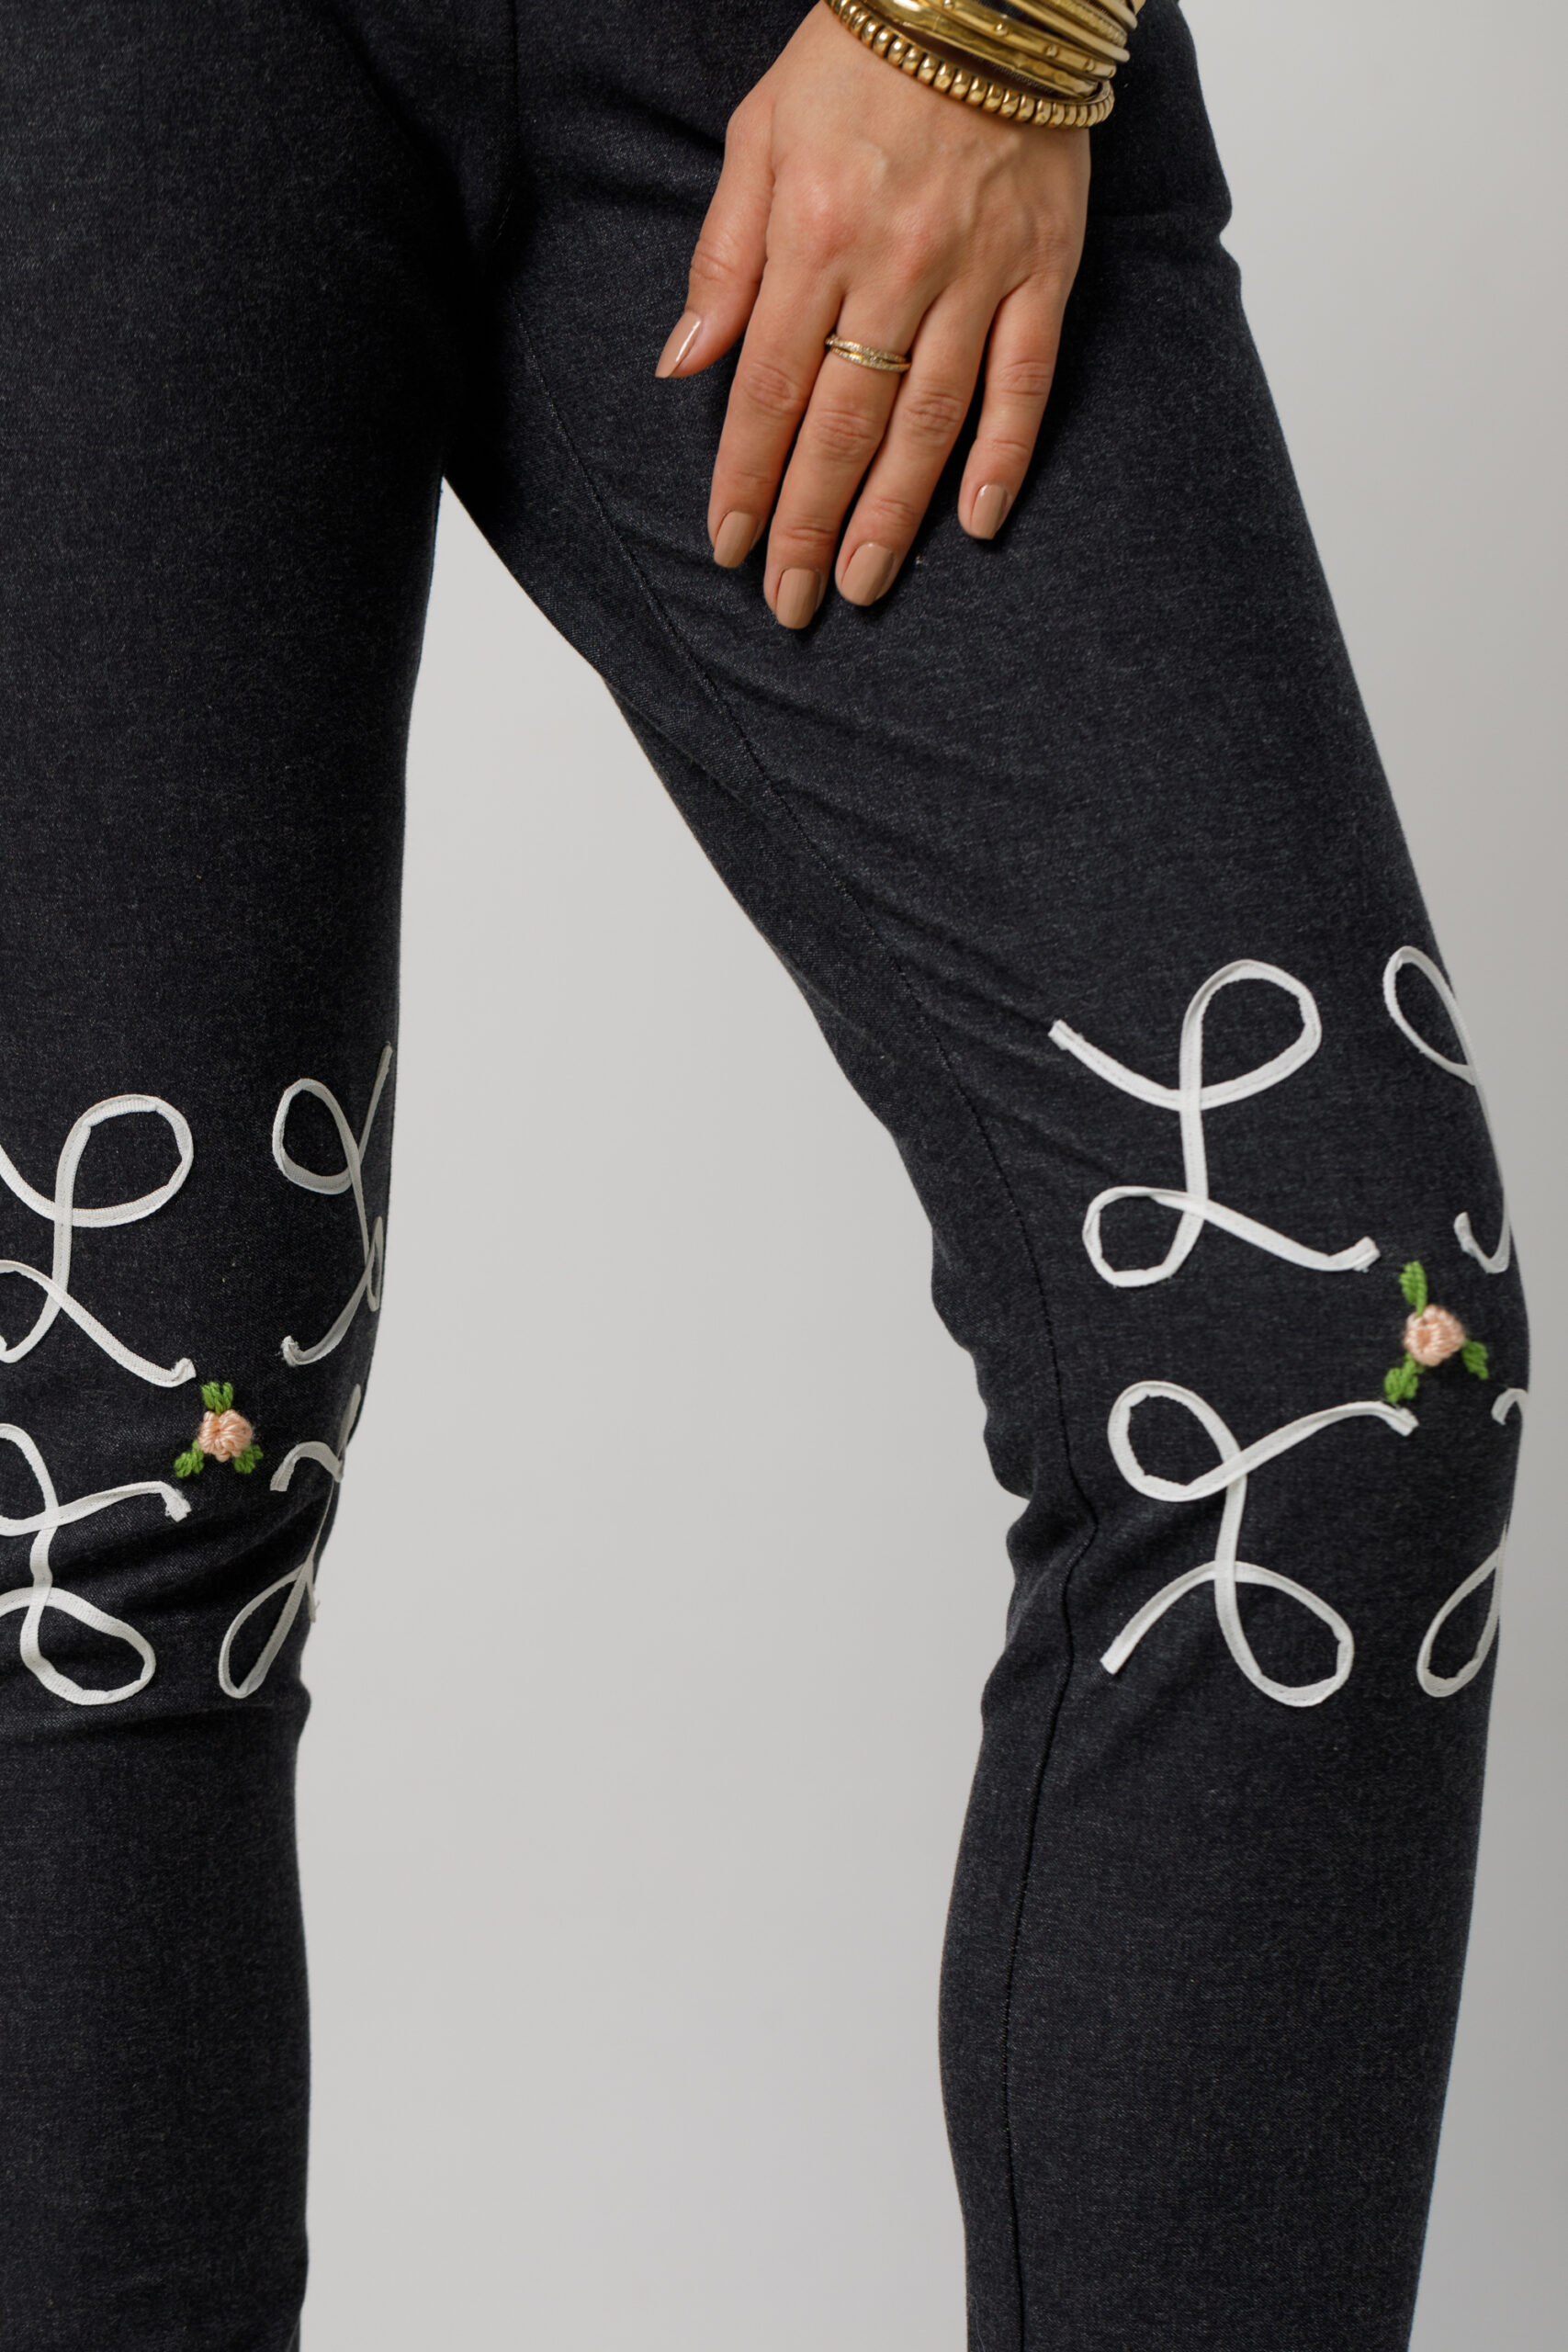 Pantalon SACSY gri casual din blug. Materiale naturale, design unicat, cu broderie si aplicatii handmade